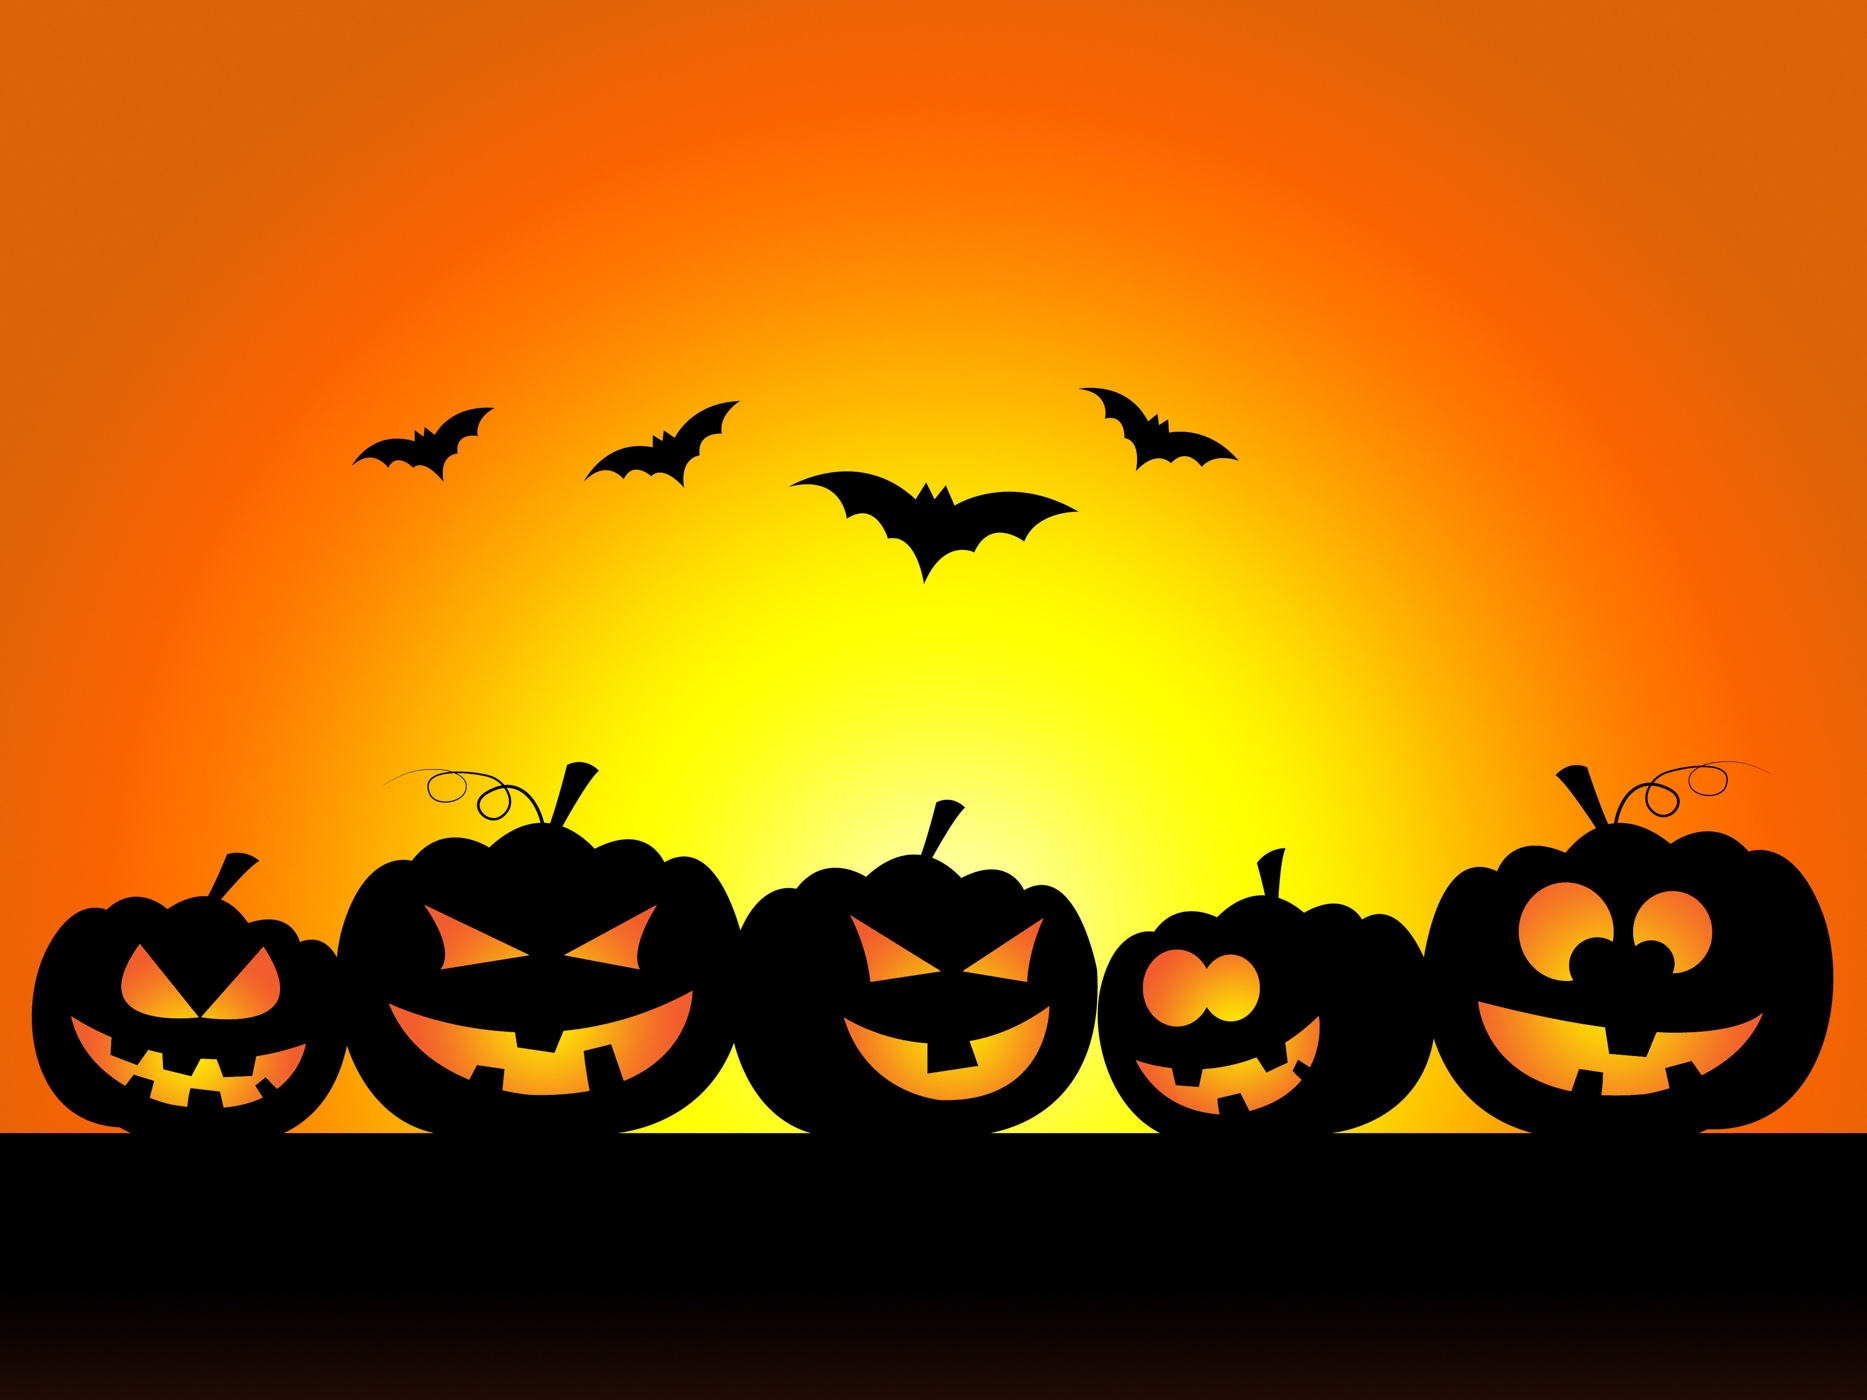 Free photo: Bats Halloween Indicates Trick Or Treat And Celebration ...